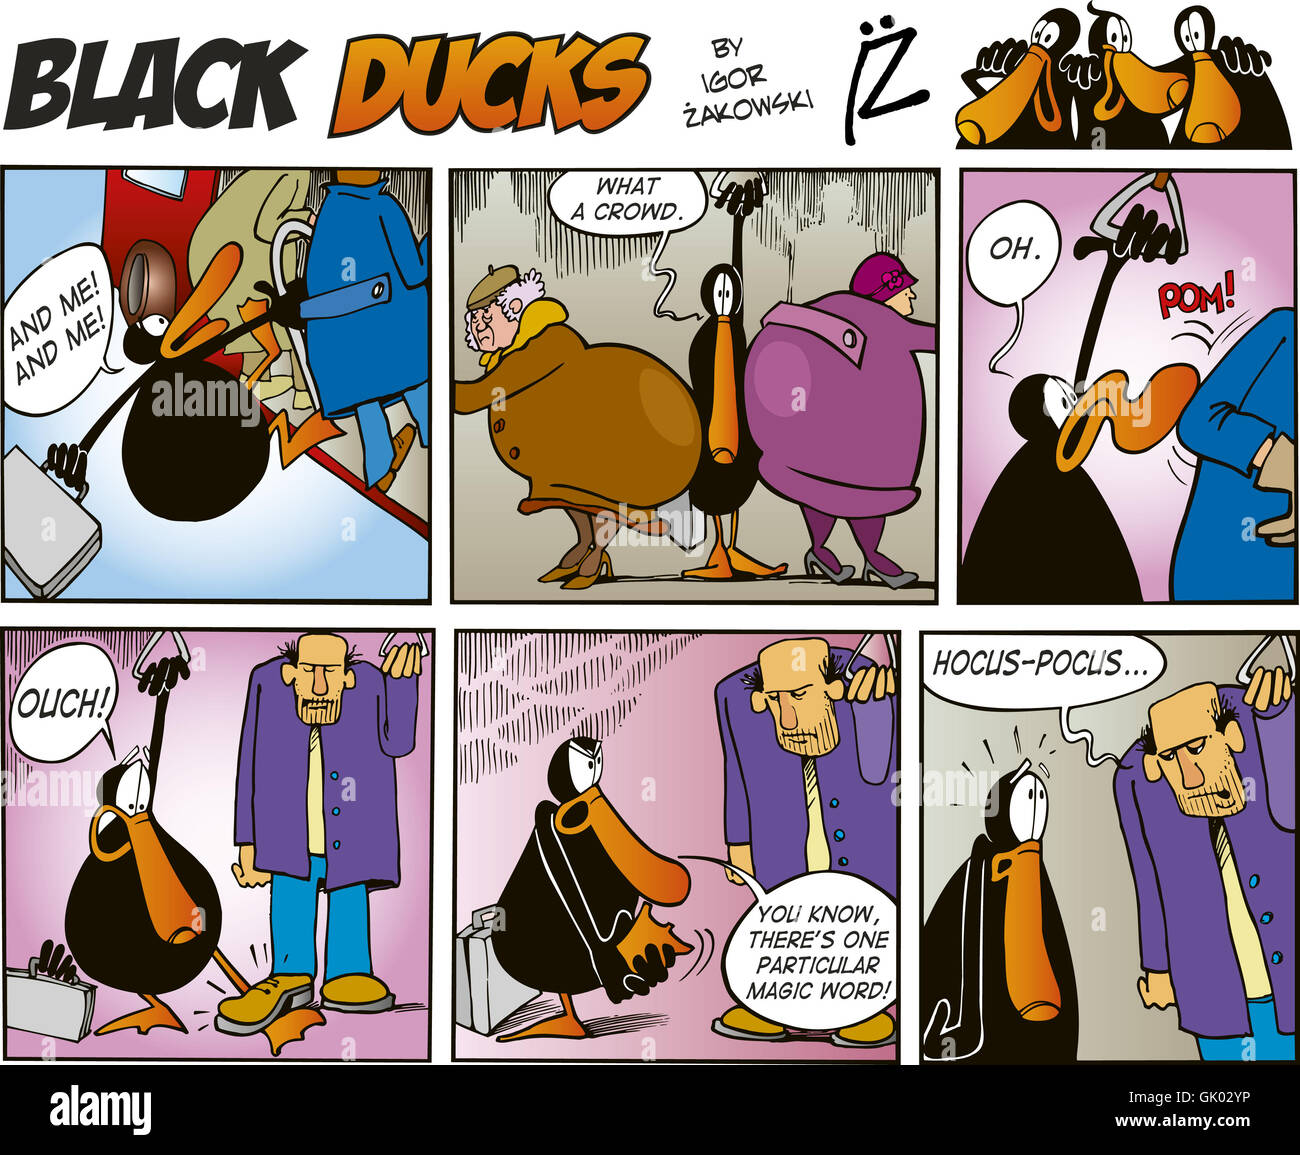 Black Ducks Comics episode 5 Stock Photo